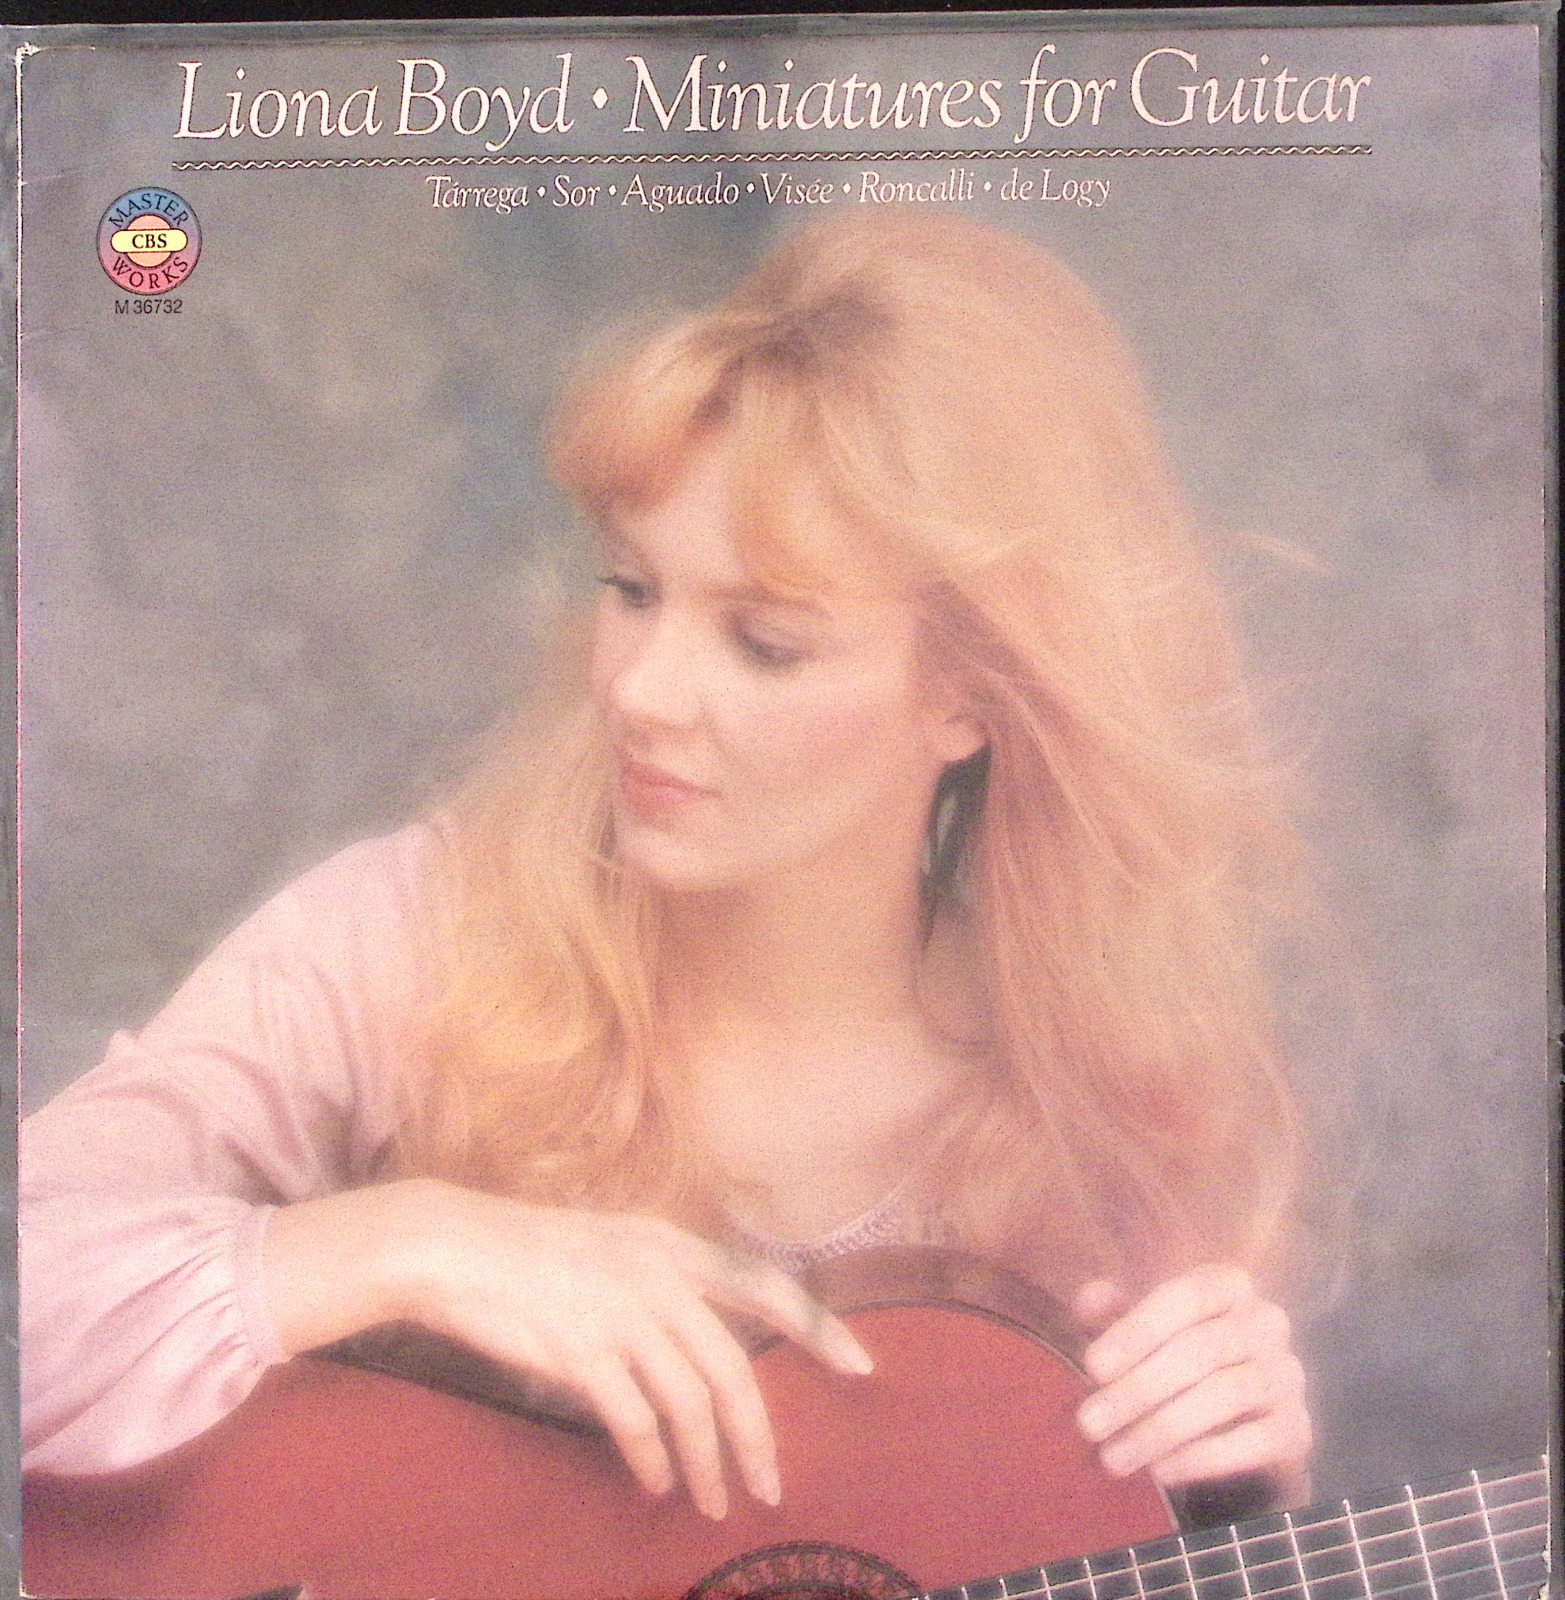 LIONA BOYD MINIATURES FOR GUITAR CBS RECORDS   VINYL LP  164-31